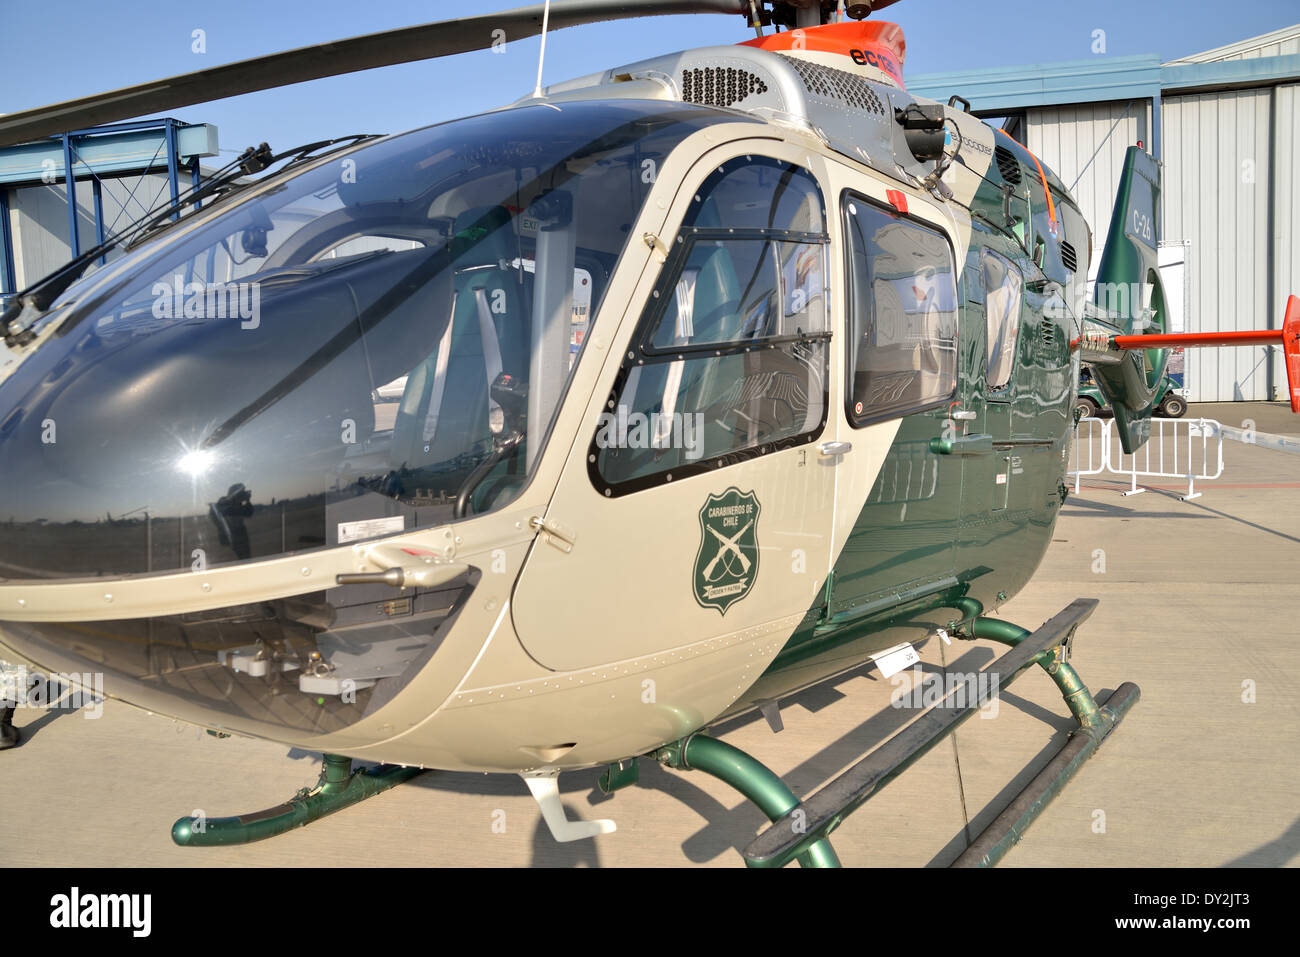 Elicottero della polizia, Eurocopter EC135 carabiniers del Cile (carabineros de chile), Foto Stock